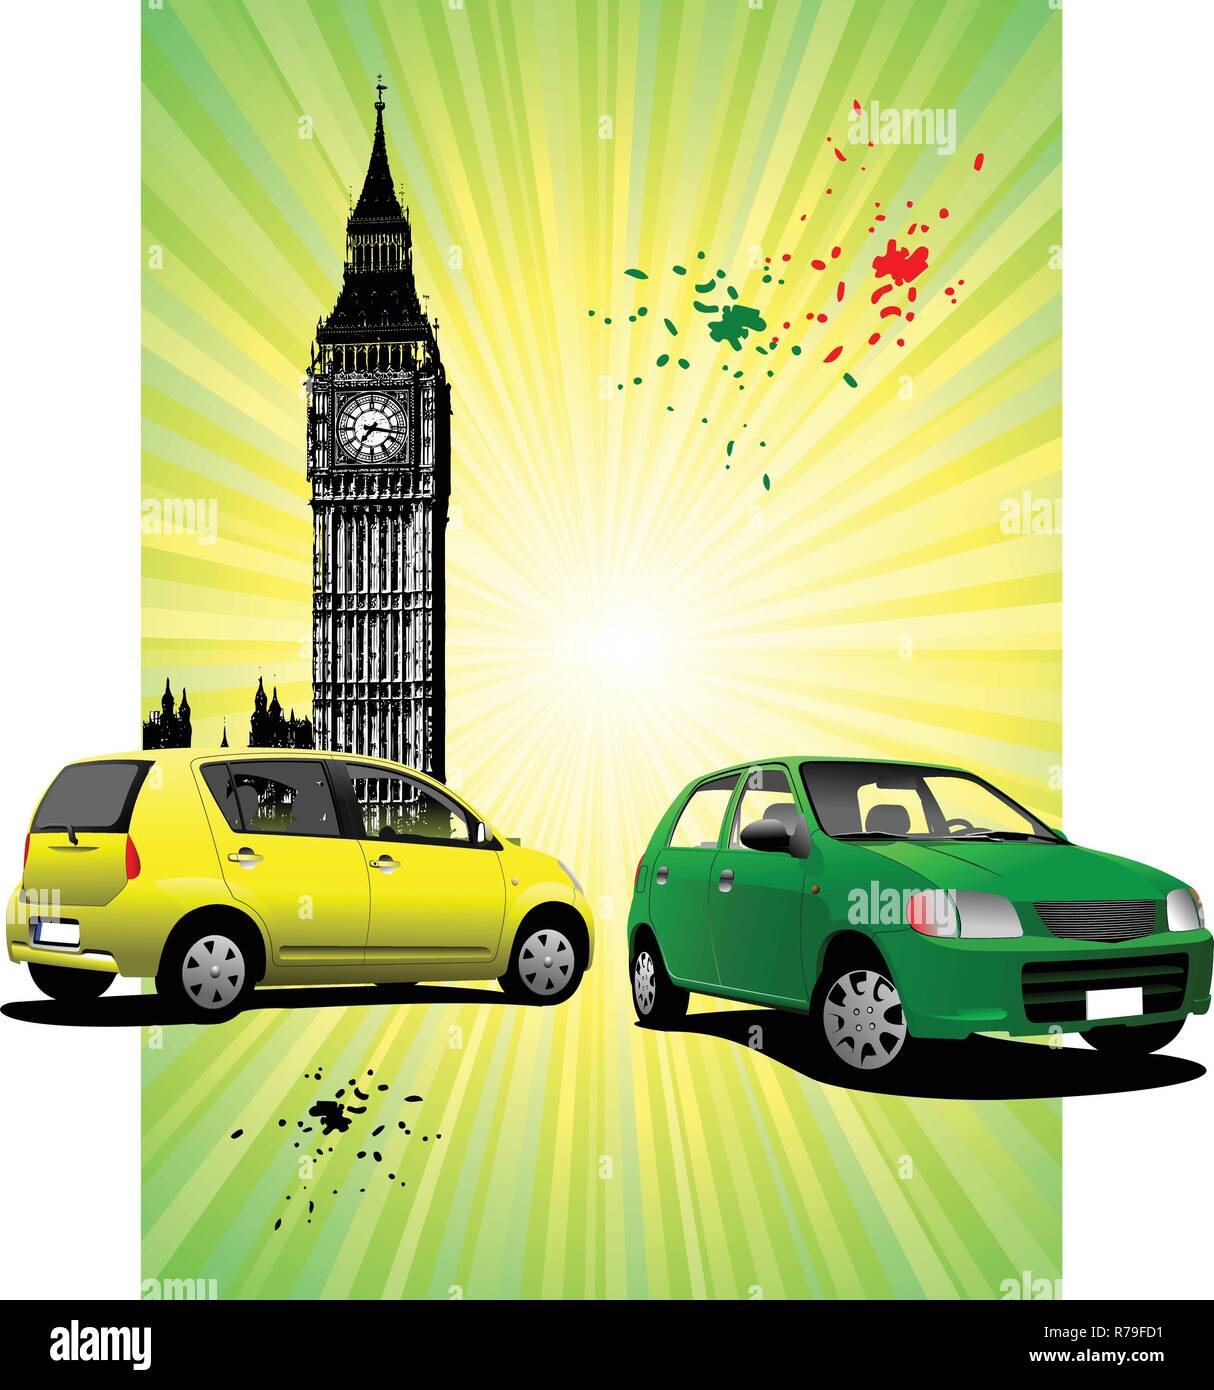 London Poster mit zwei Autos Bild. Vektor-illustration Stock Vektor